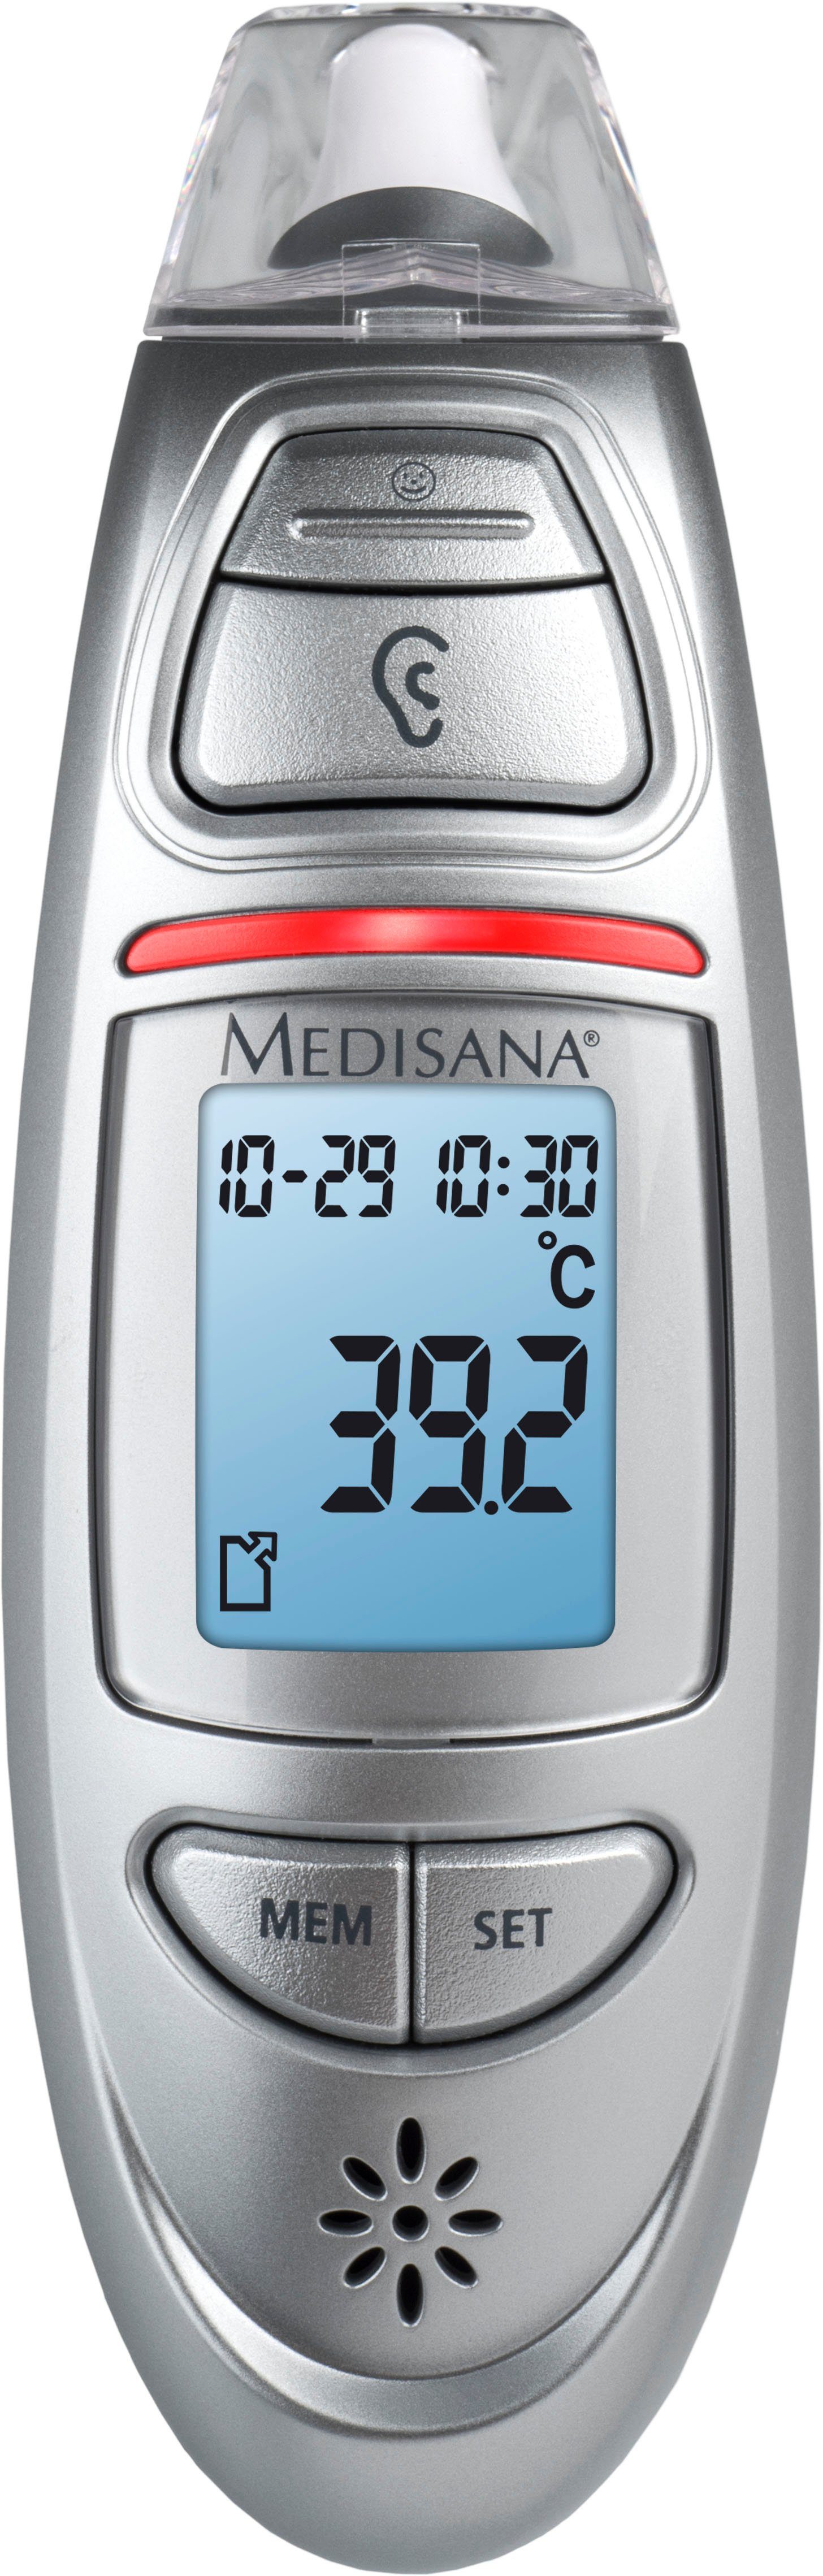 750 Medisana Fieberthermometer TM Connect